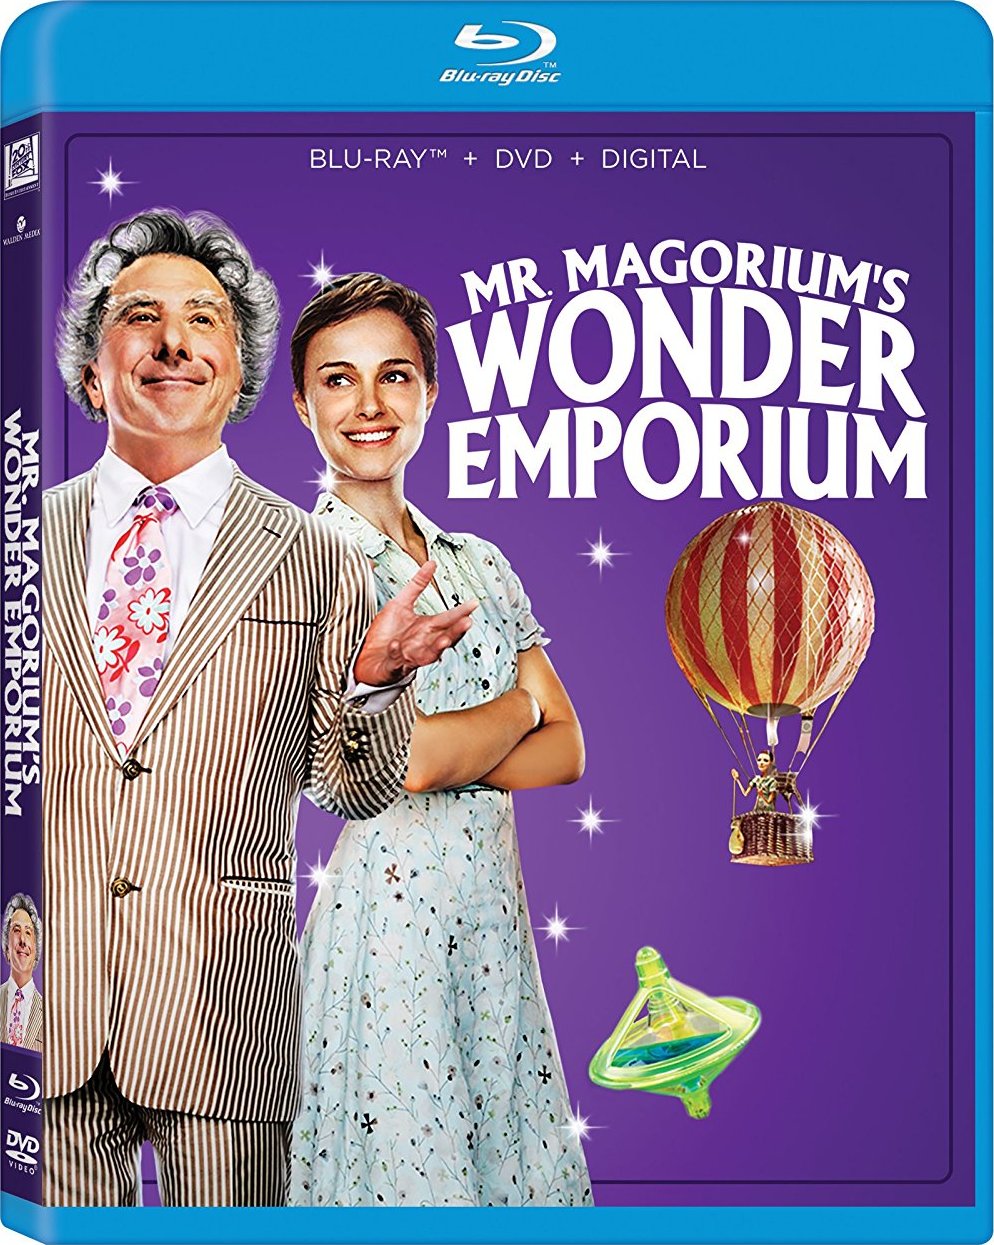 [马格瑞姆的神奇玩具店].Mr..Magorium's.Wonder.Emporium.2007.BluRay.1080p.AVC.DTS-HD.MA.5.1-DiY@HDHome     30.4G-1.jpg